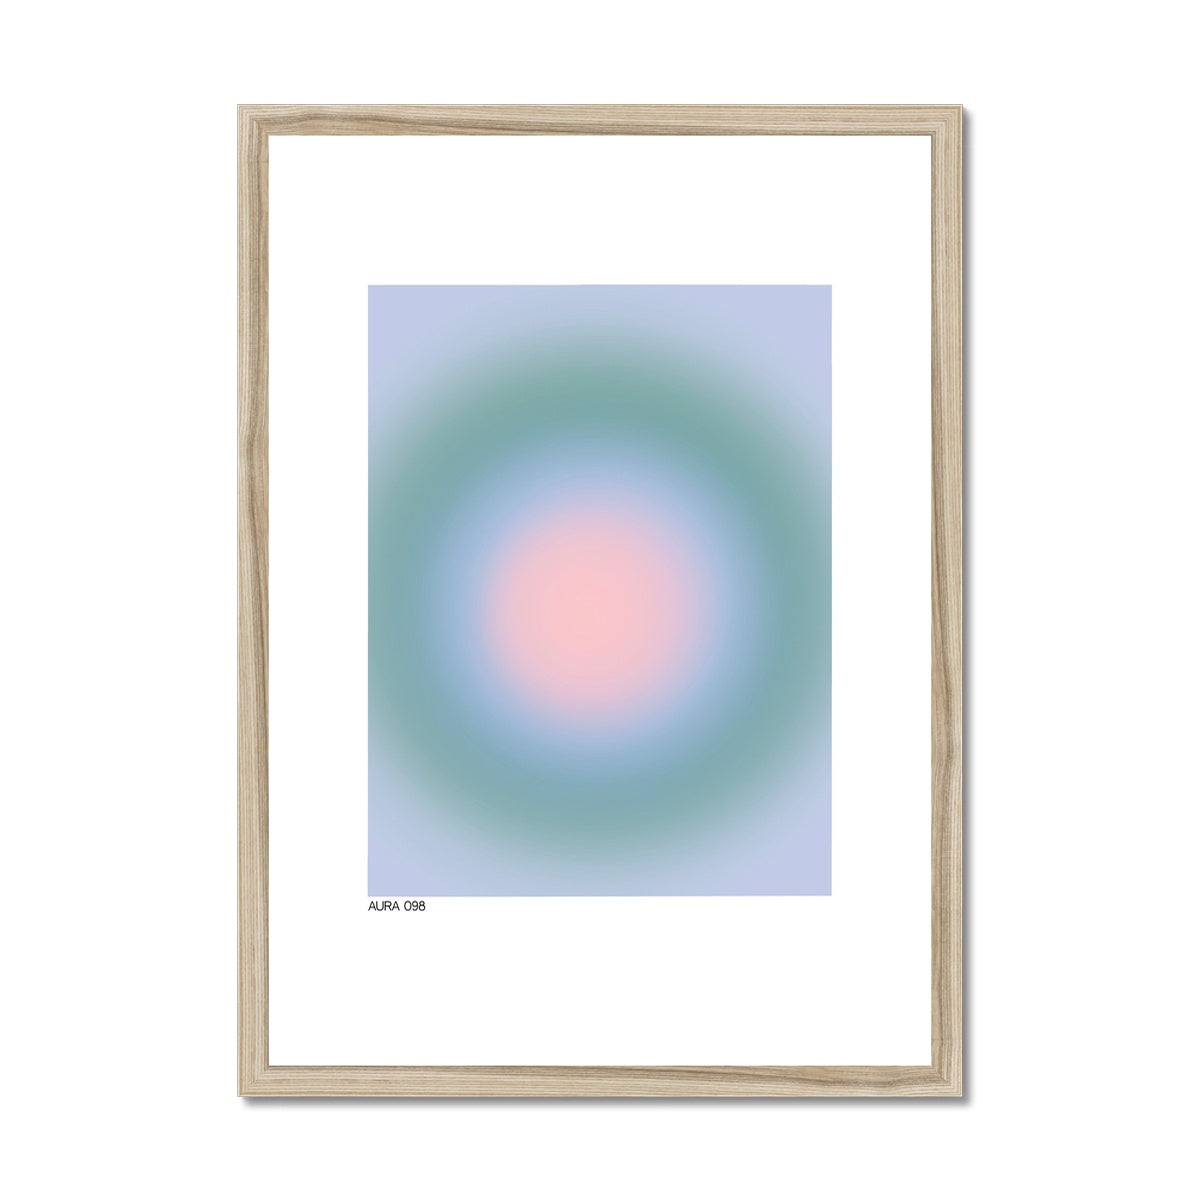 aura 098 Framed & Mounted Print